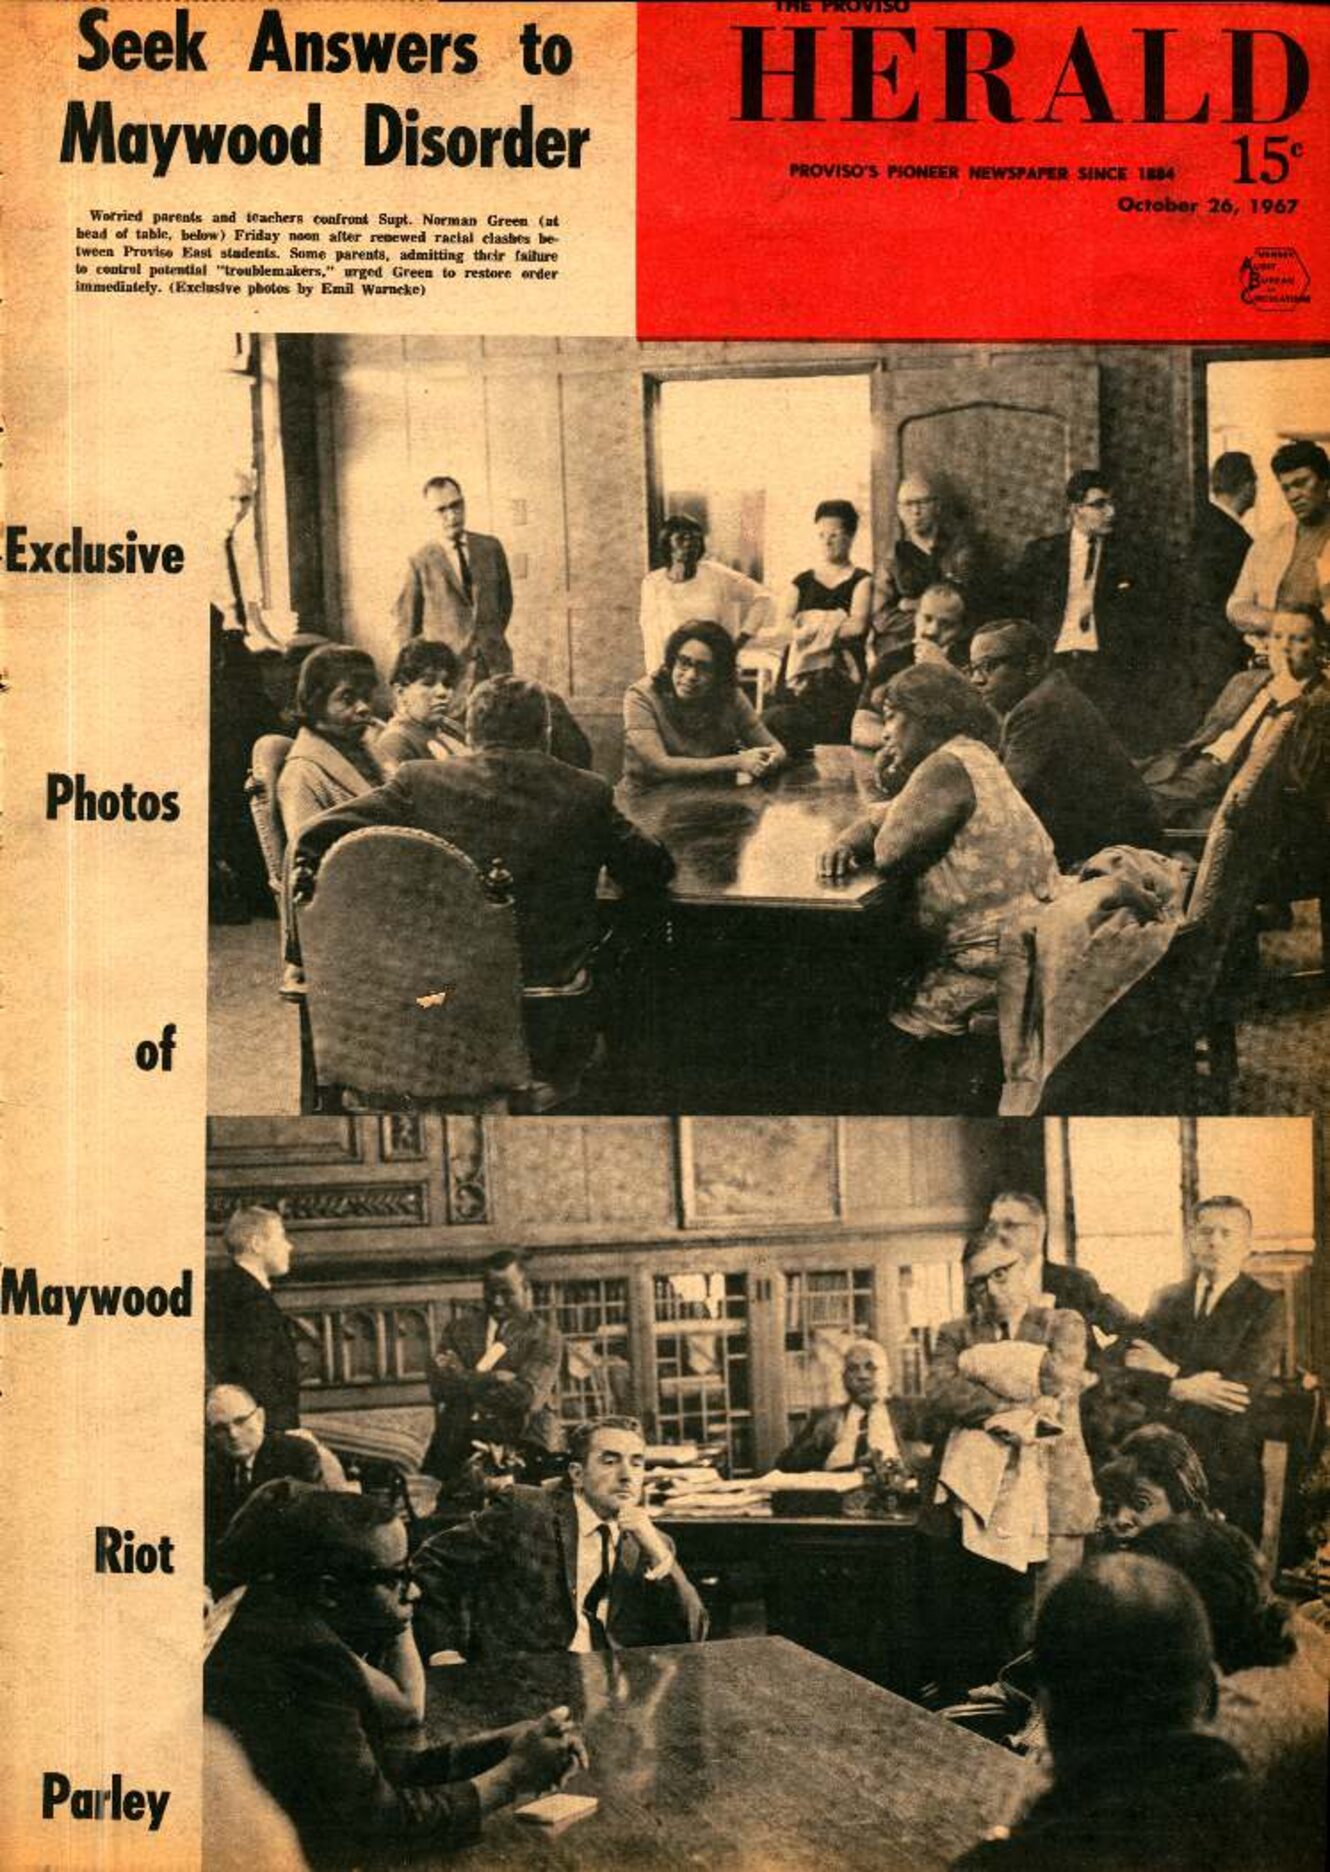 The Herald – 19671026